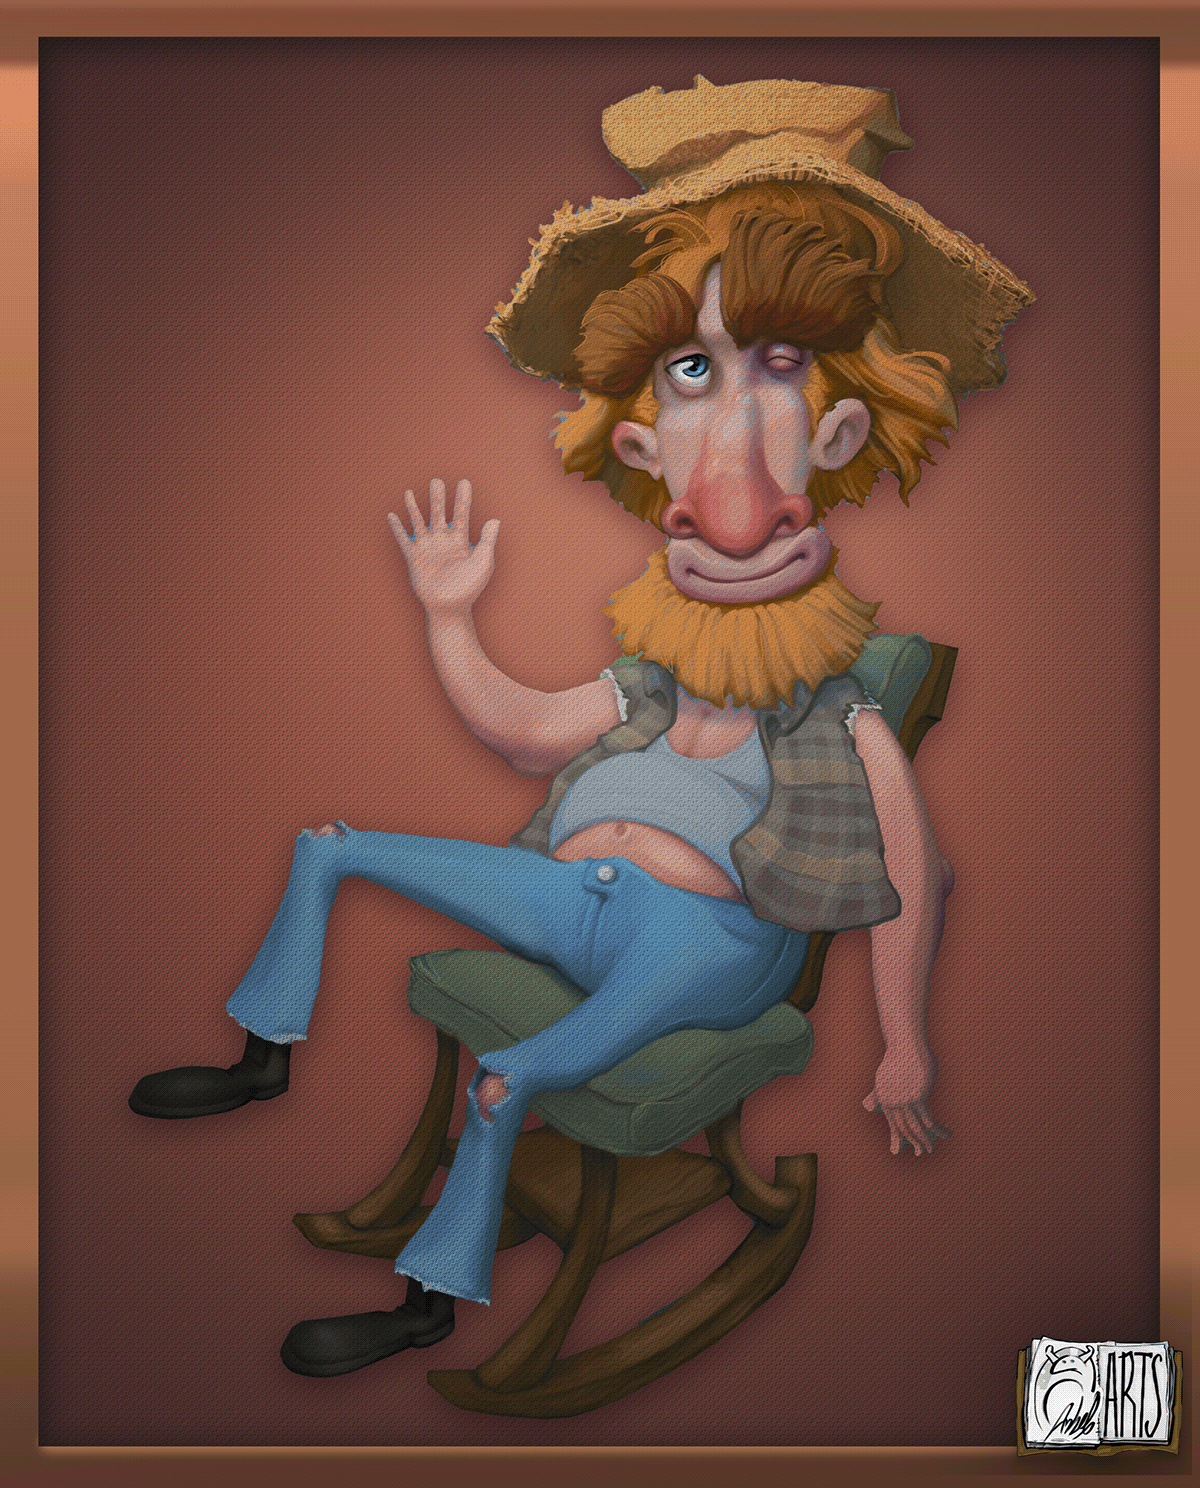 hillbilly redneck funny cartoon concept art digital painting portrait